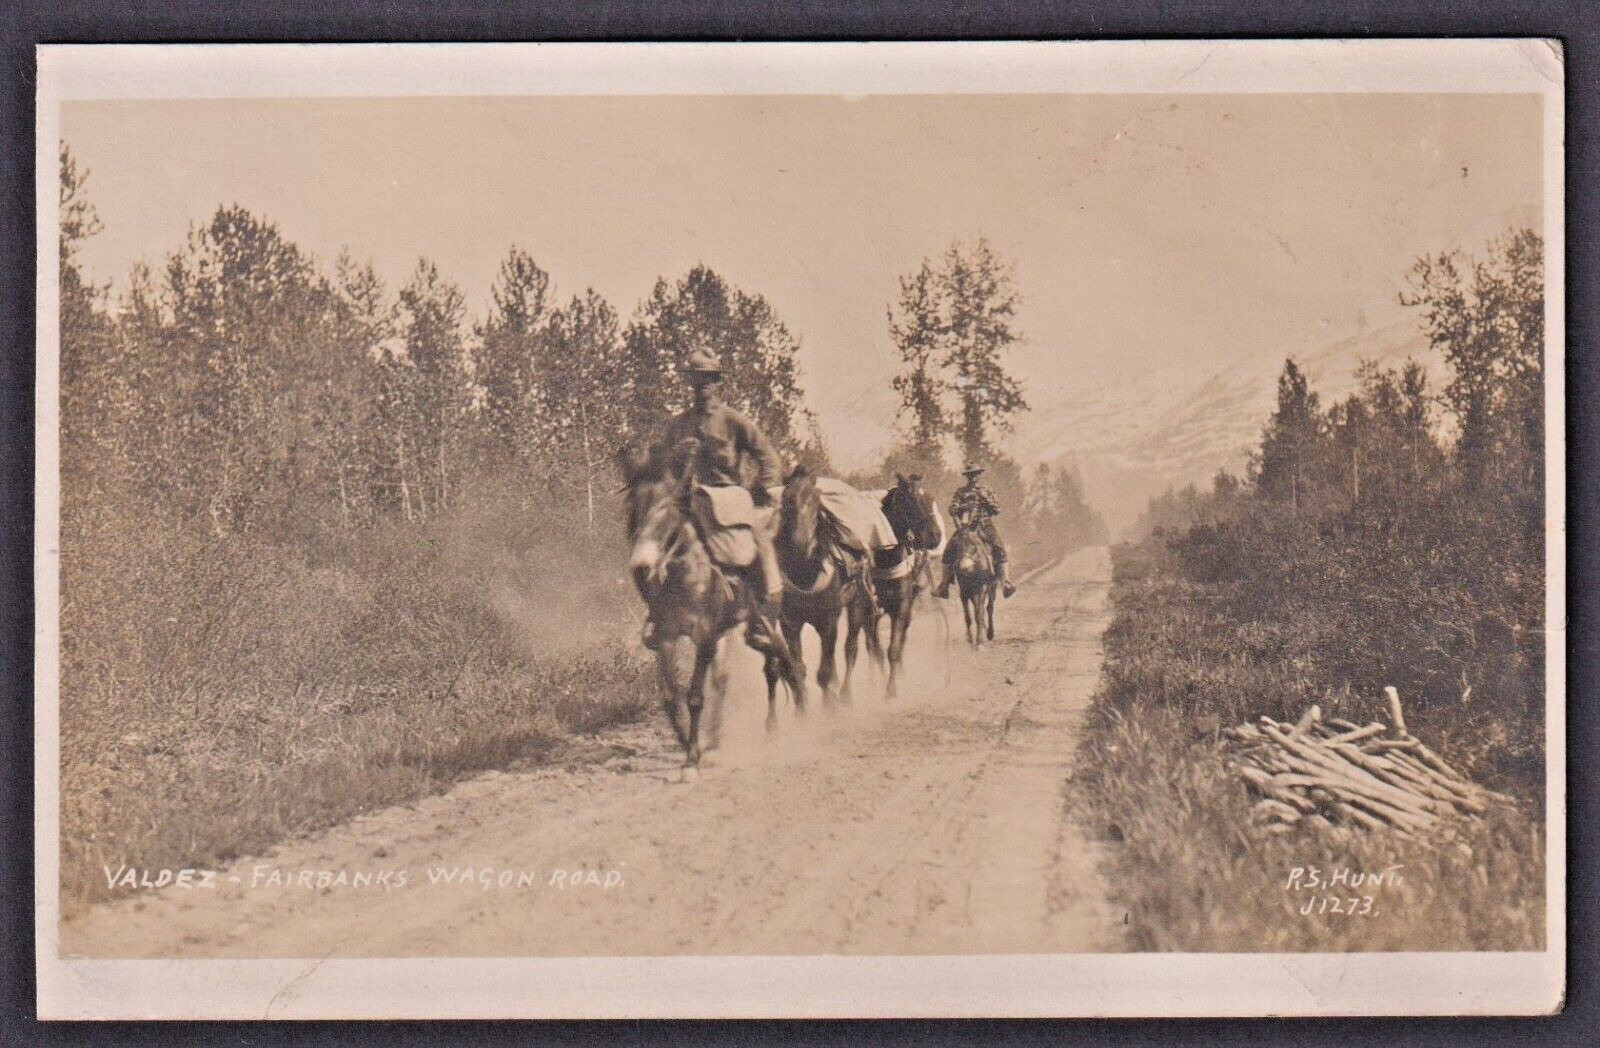 c 1910-1914 RPPC Photo VALDEZ - FAIRBANKS WAGON ROAD, PS Hunt Photo J1273